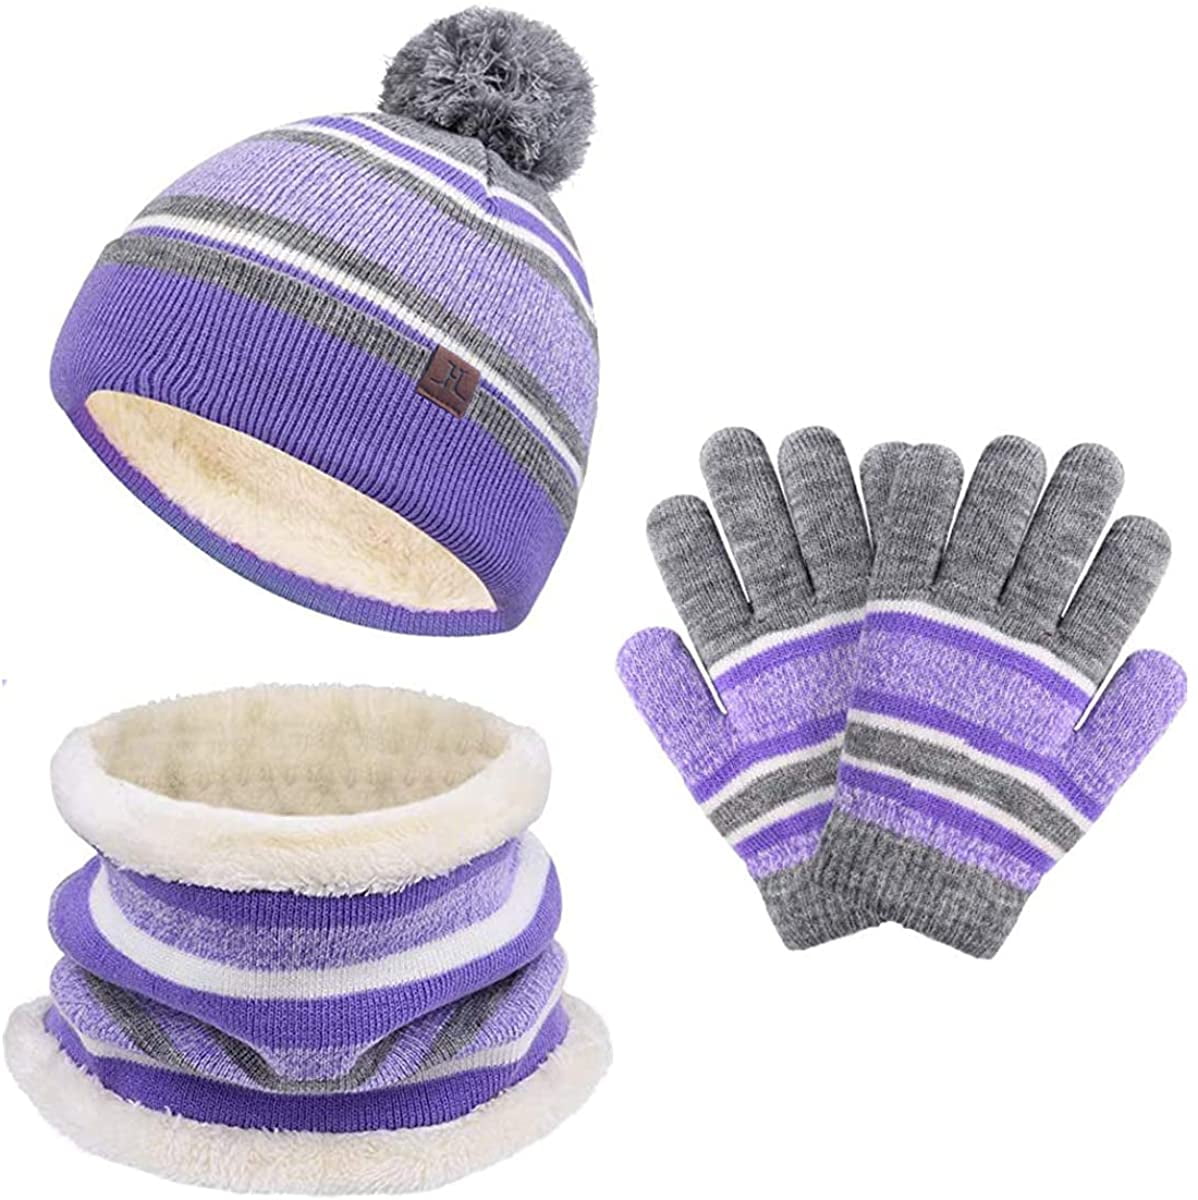 A--black--3 Pcs-- hat+scarf+gloves Maylisacc 3 Pcs Winter Knit Free Size